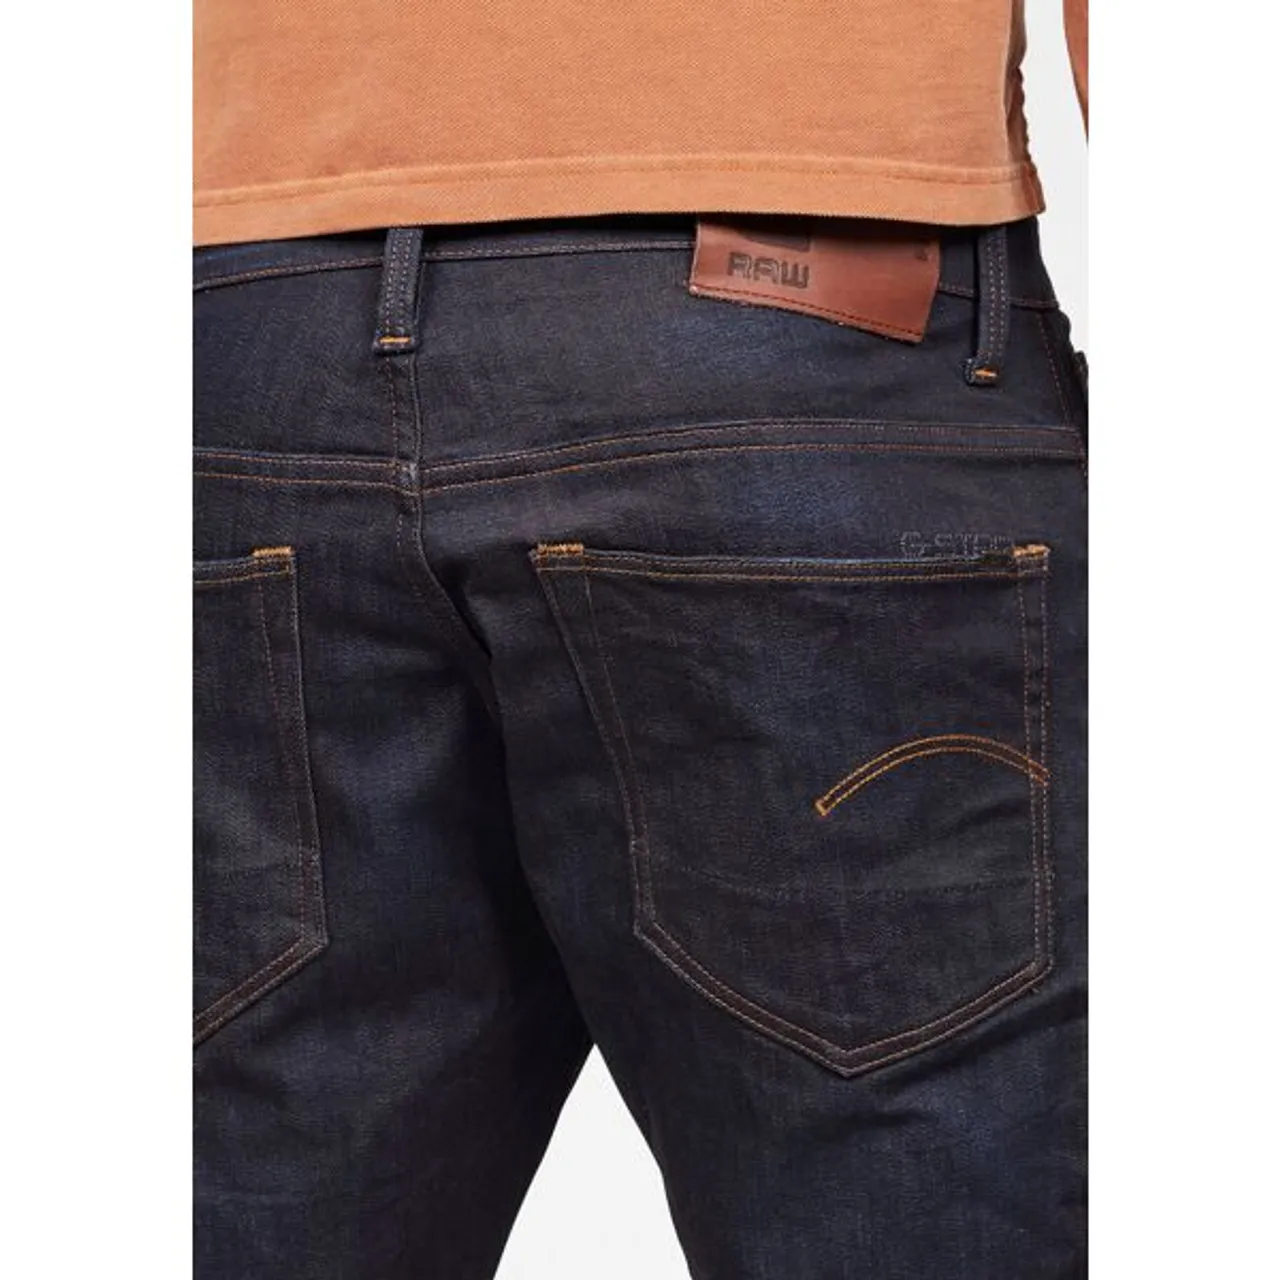 Regular-fit-Jeans G-STAR RAW "3301 Straight Tapered" Gr. 36, Länge 32, blau (dark, blue) Herren Jeans Regular Fit